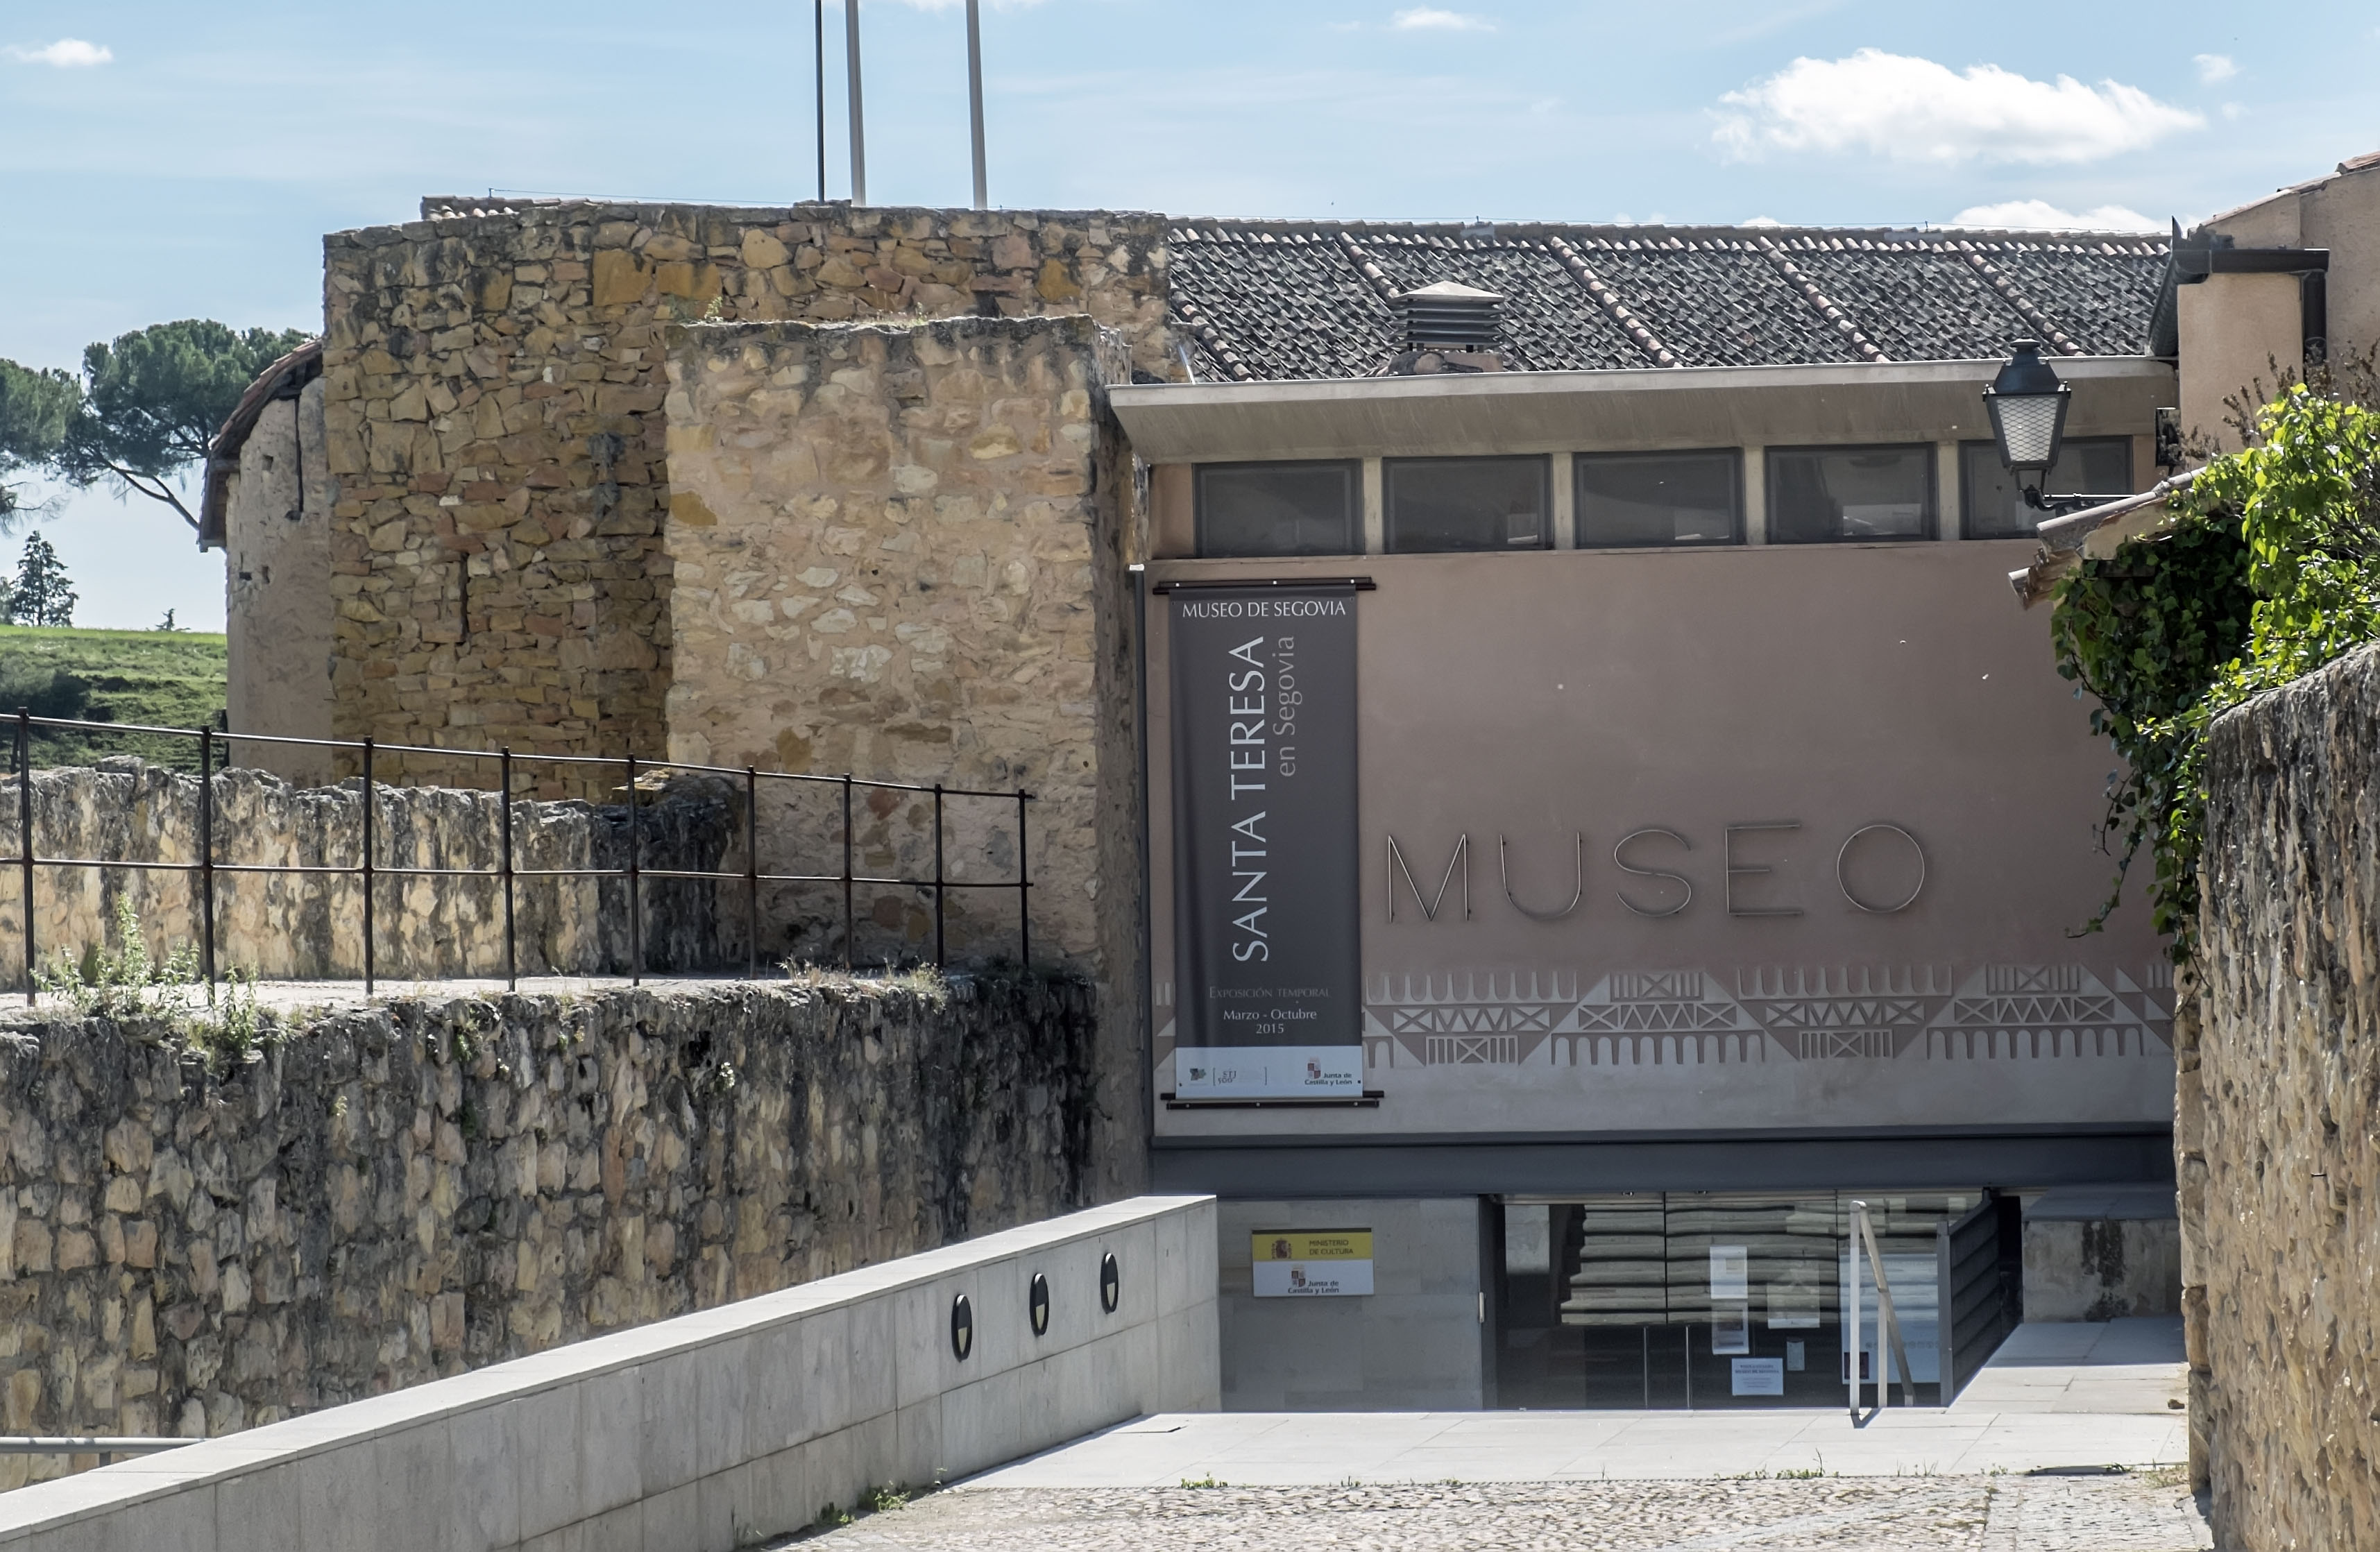 20150429_Museo Provincial Segovia_DSF8397.jpg